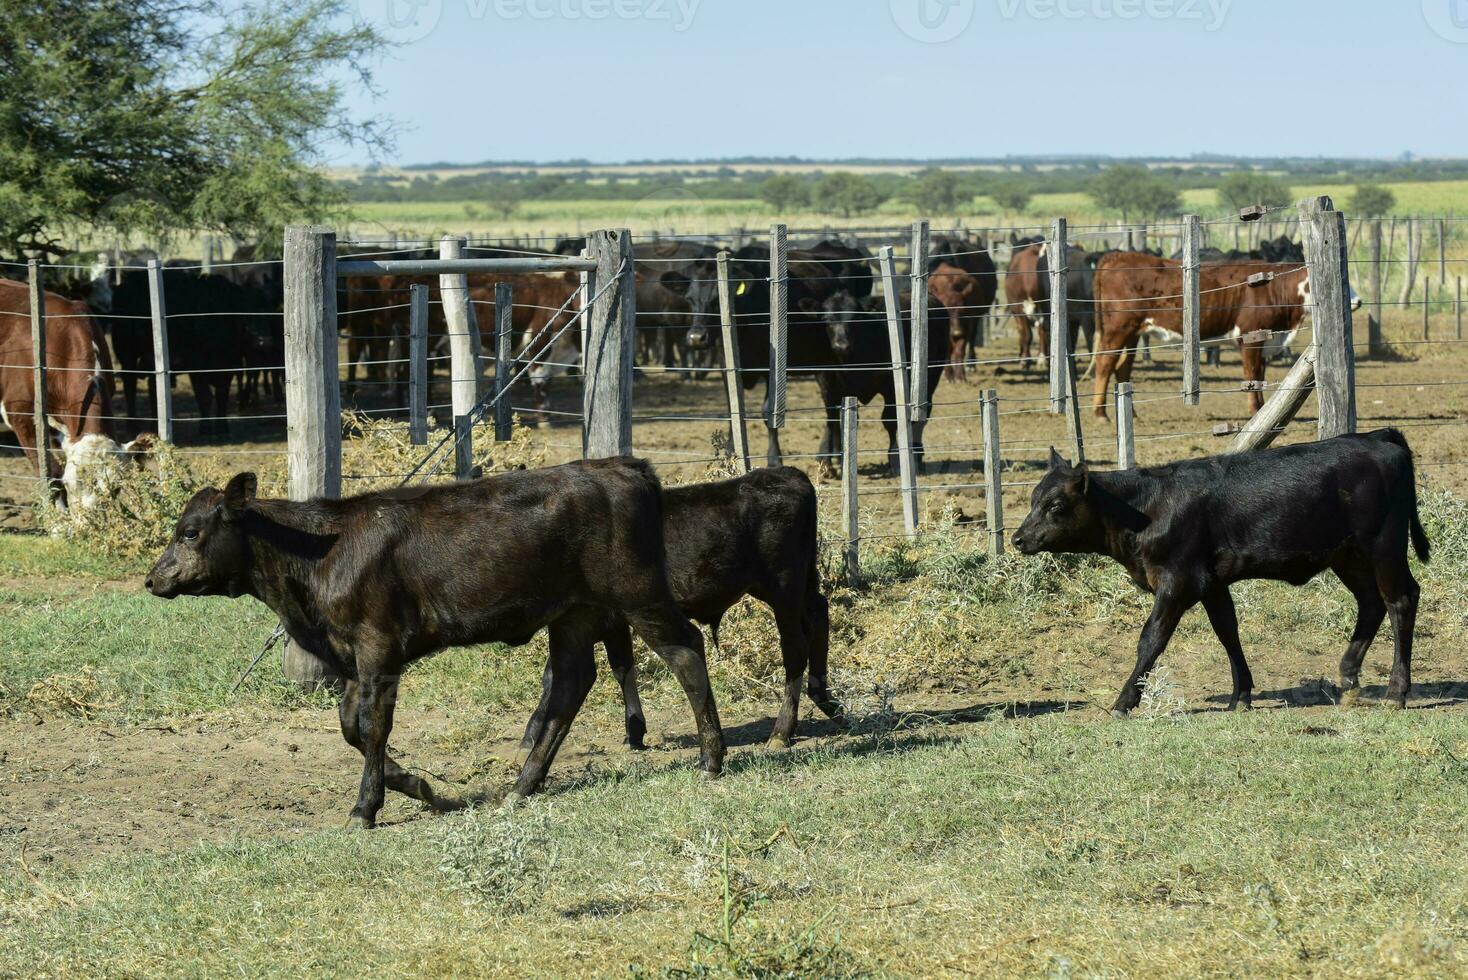 kor i de ko penna , argentine kött produktion foto